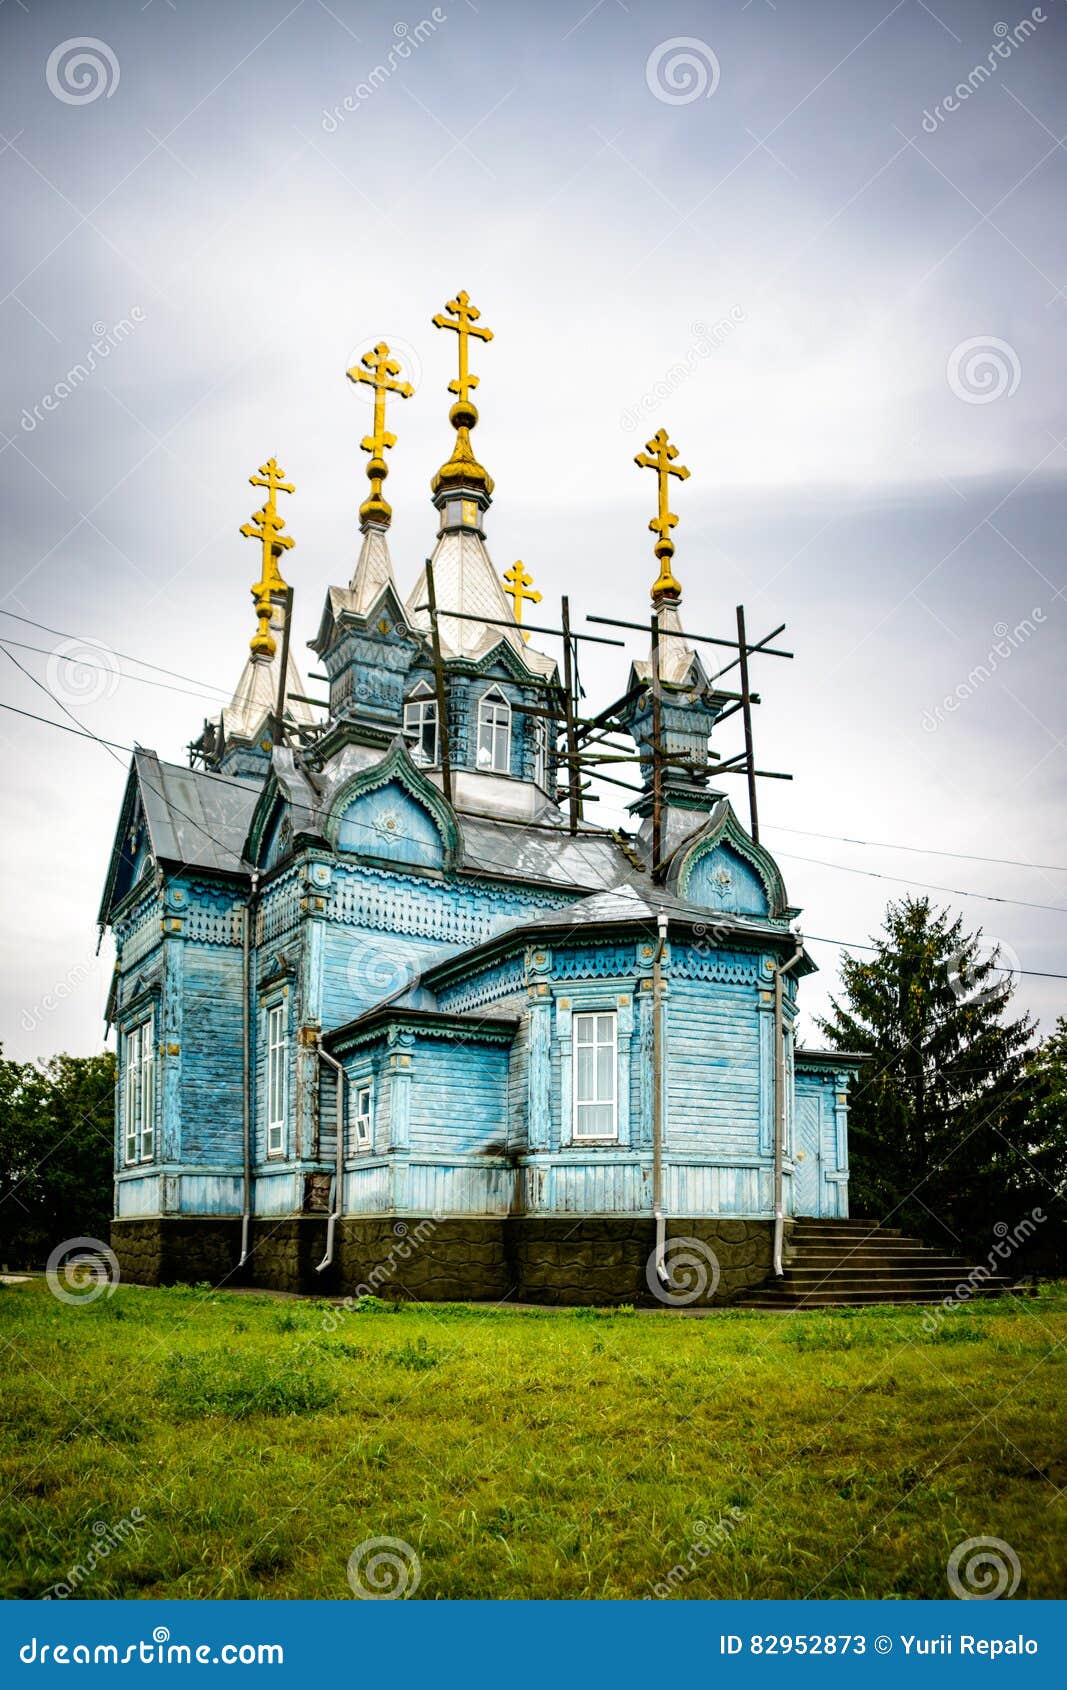 the unique old wooden church in the village larga. moldova. biserica de lemn